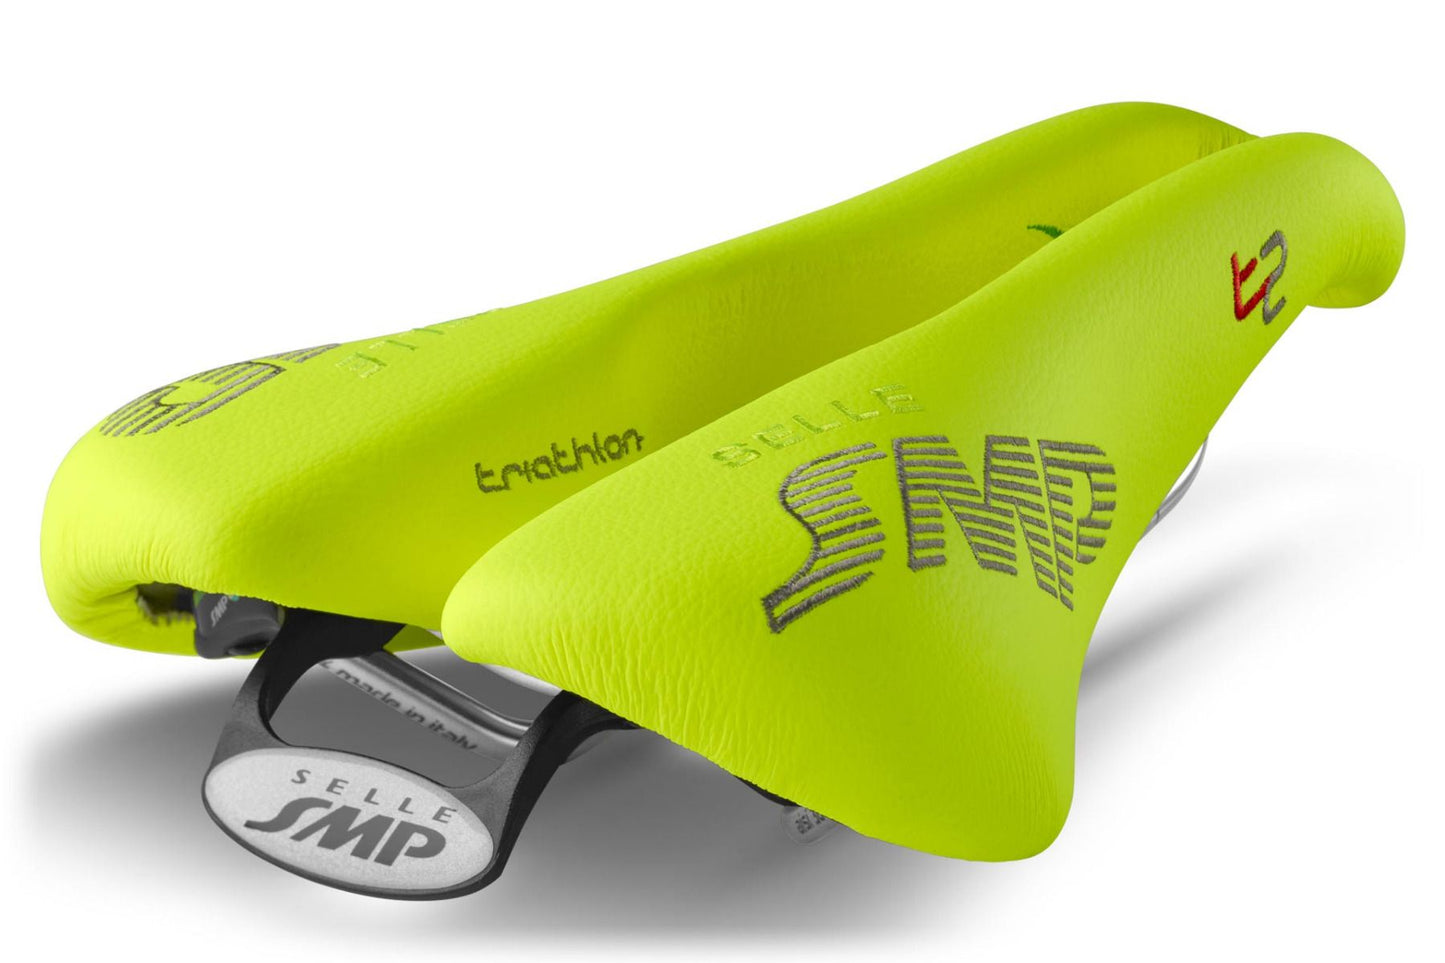 Selle SMP T2 Triathlon Saddle with Steel Rails (Fluro Yellow)